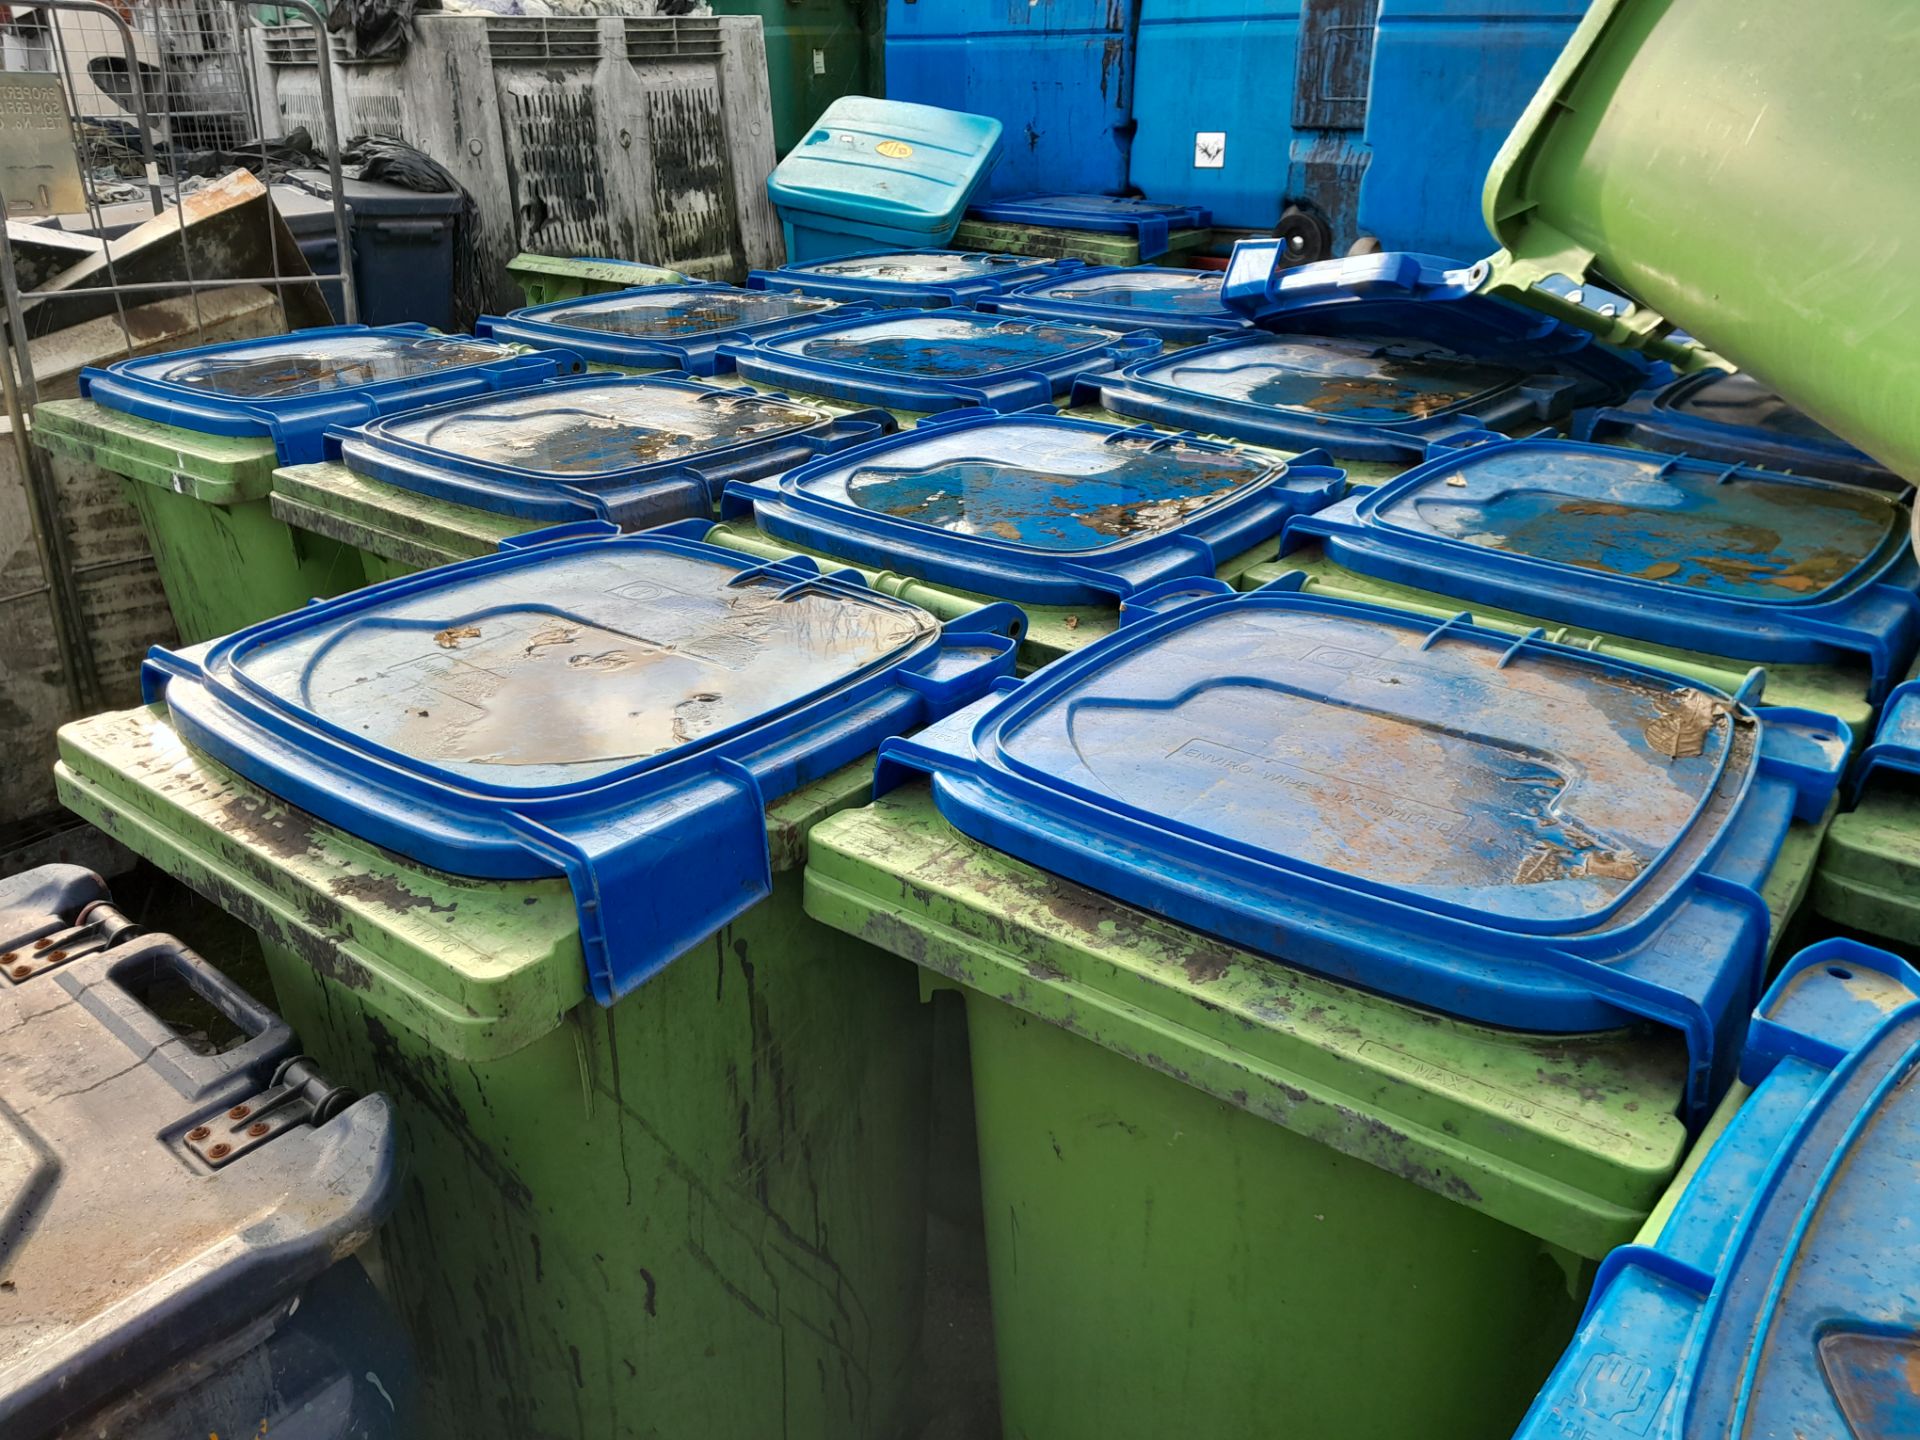 10 P Henken Green wheelie bins with Blue lids, approx. 1000mm x 580mm x 670mm - Image 4 of 4